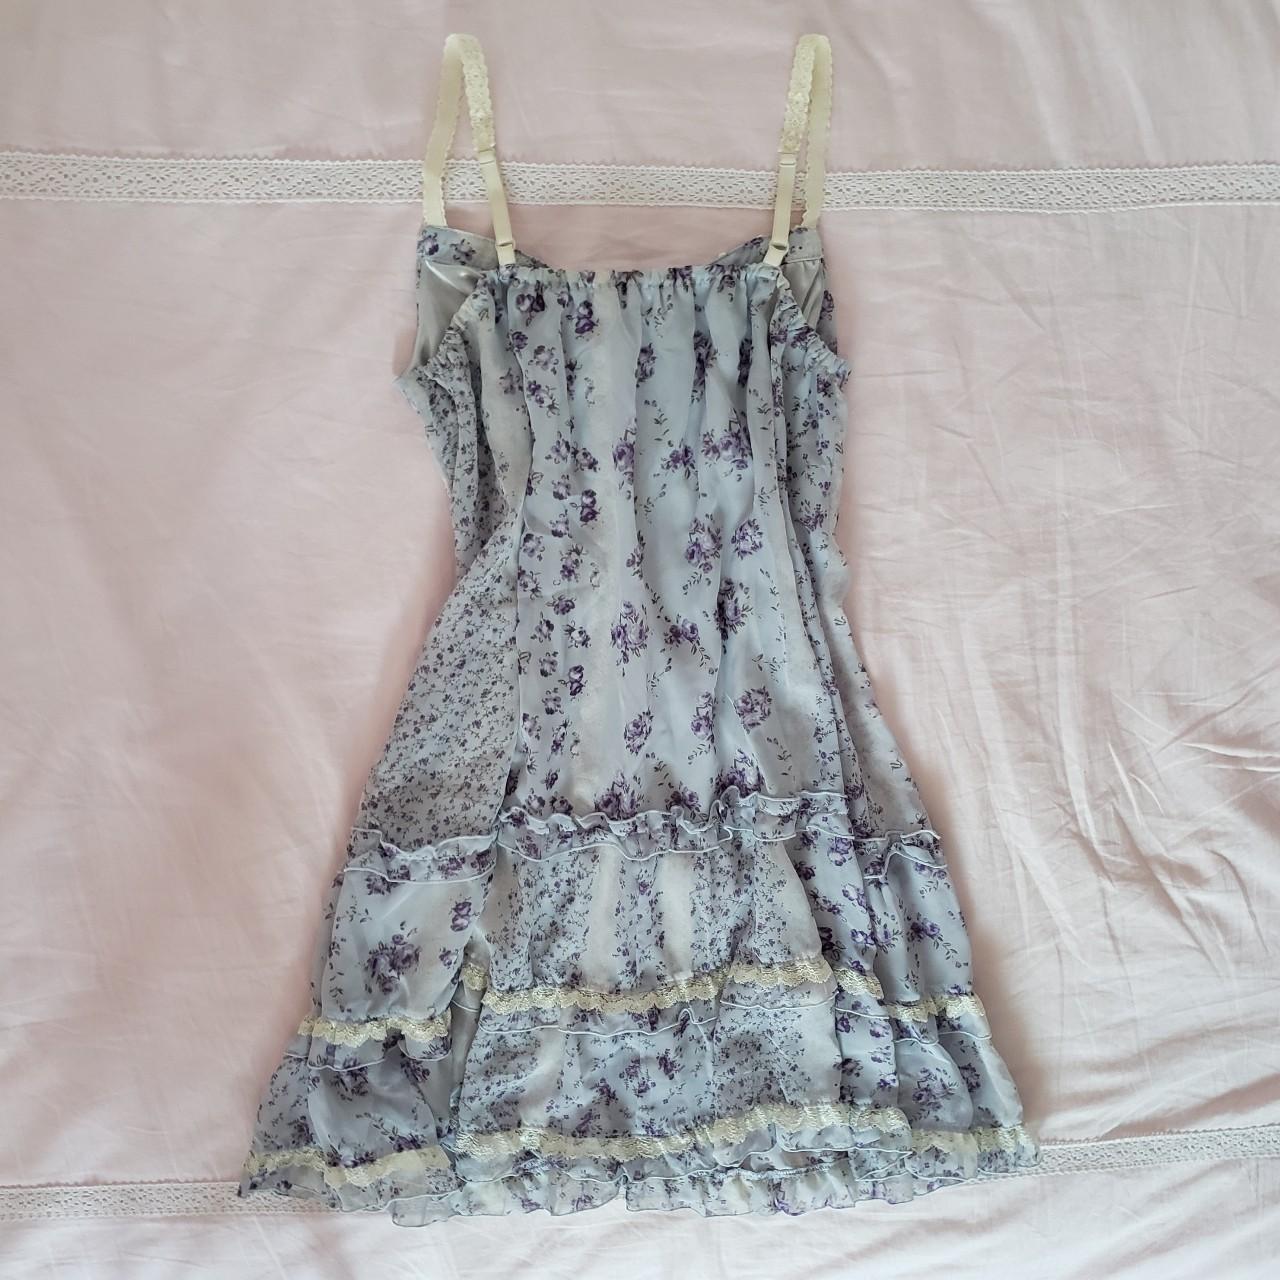 Women's Cream and Purple Dress | Depop